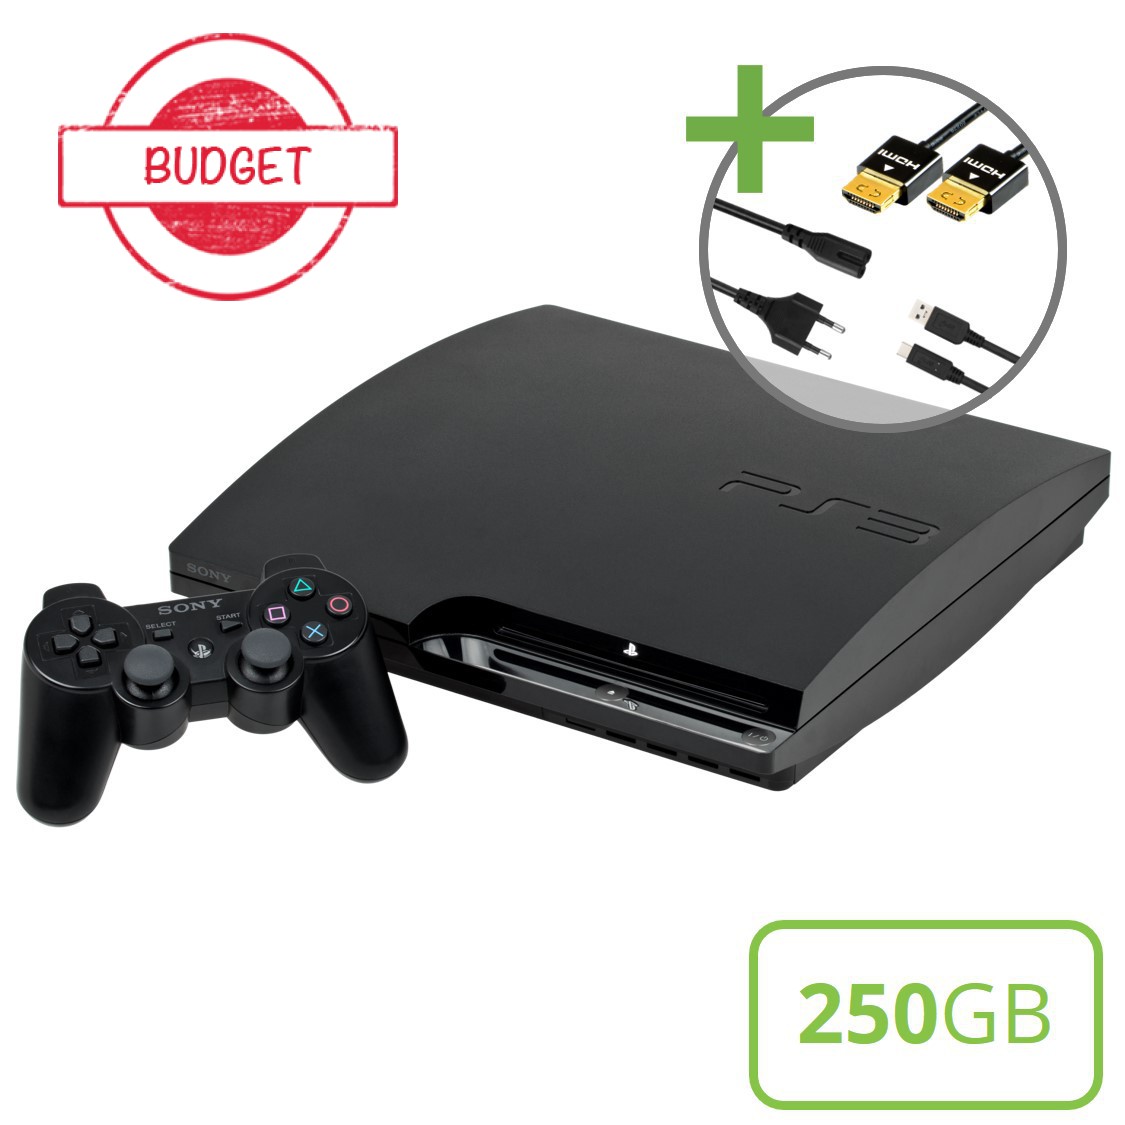 Sony PlayStation 3 Slim (250GB) Starter Pack - DualShock Edition - Budget - Playstation 3 Hardware